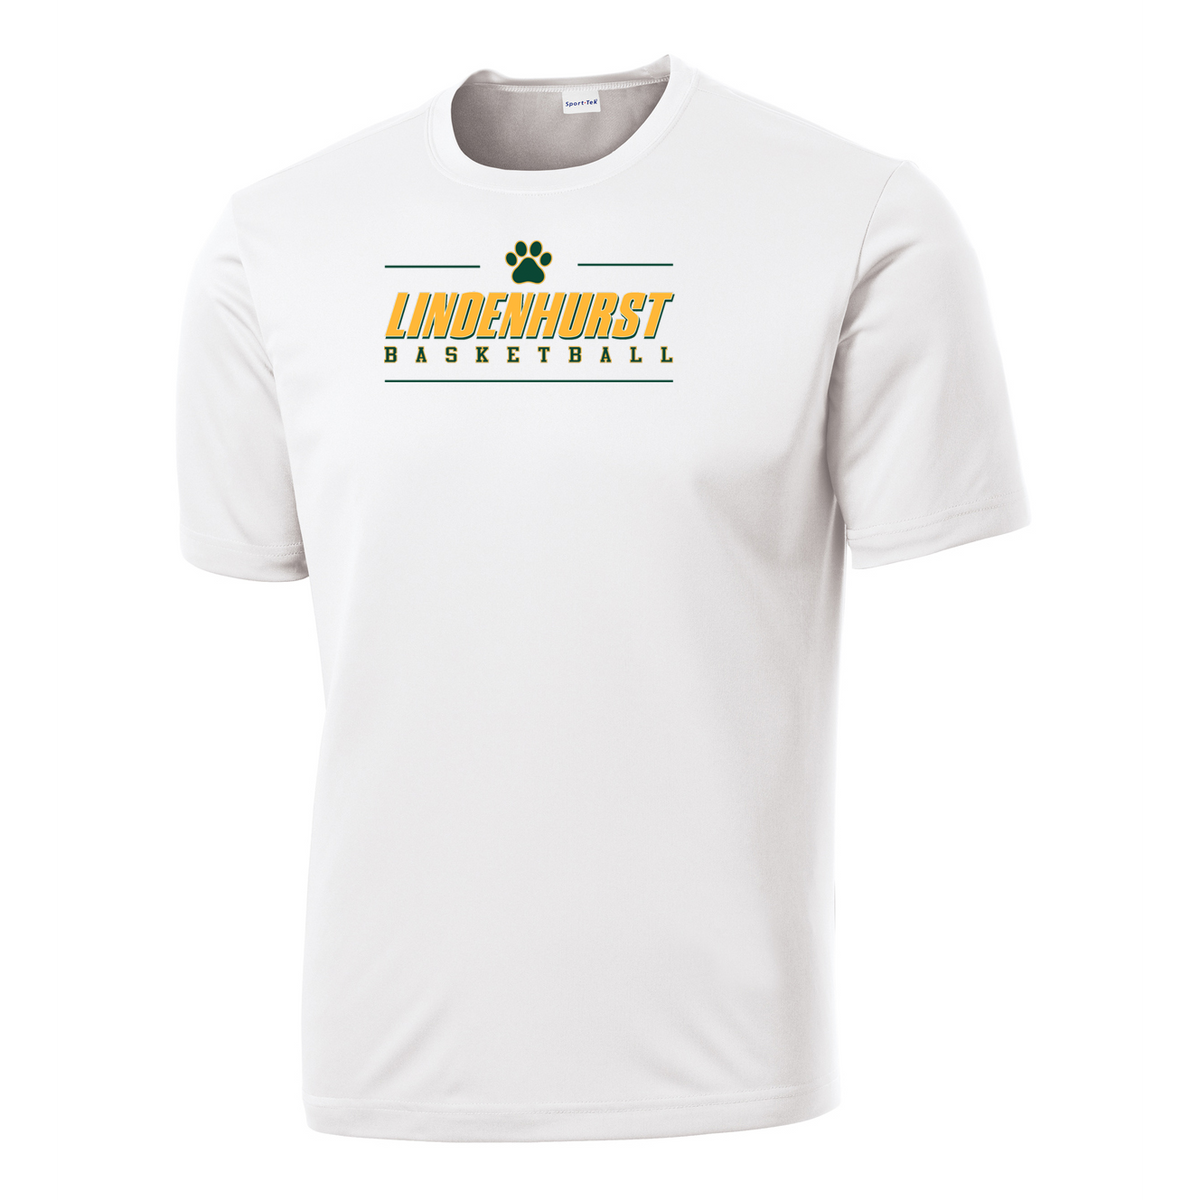 Lindenhurst Basketball Performance T-Shirt